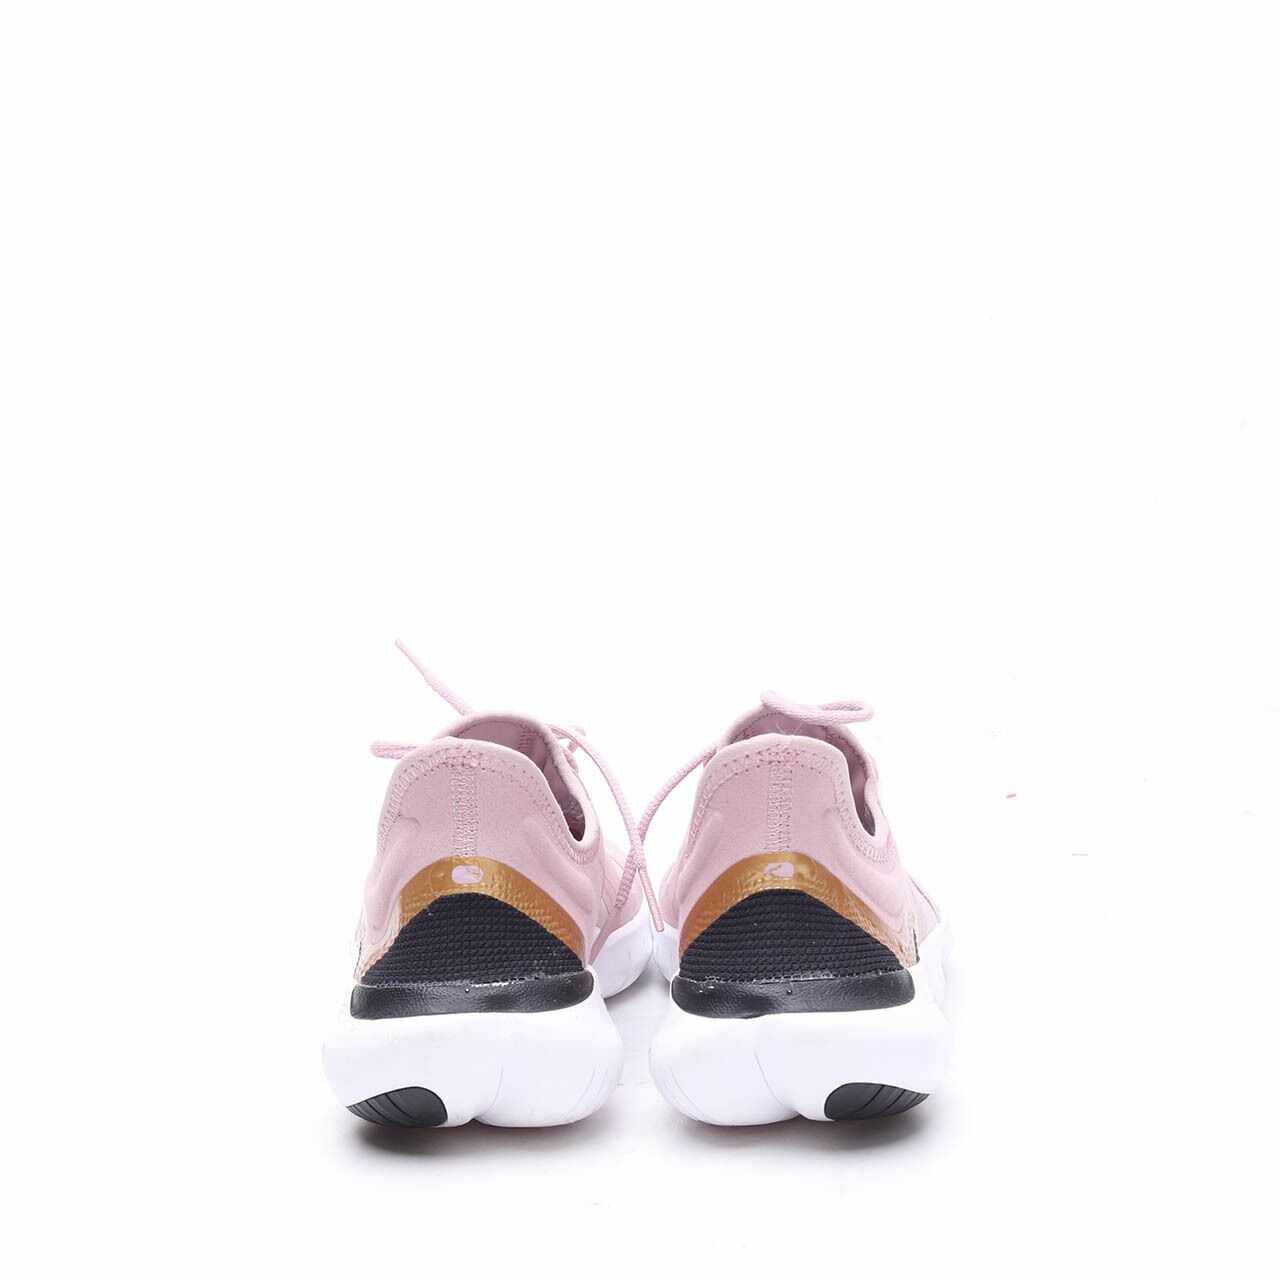 Nike Free RN 5.0 Women's Running Shoe Pink Sneakers